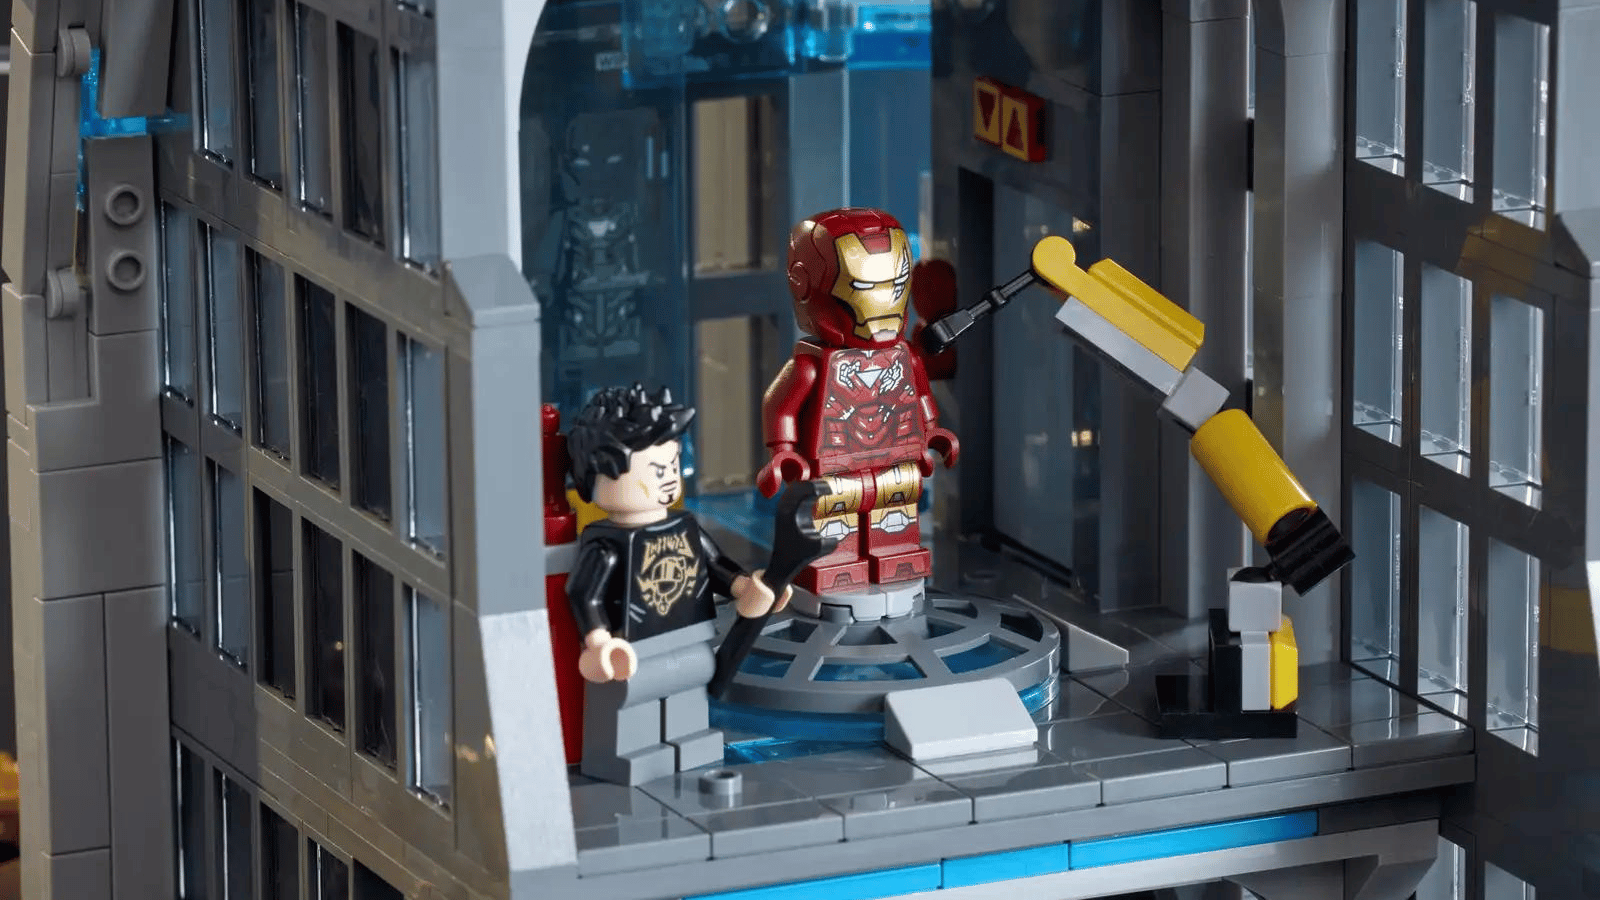 LEGO Avengers Tower - 2 (LS: SAG-AFTRA)